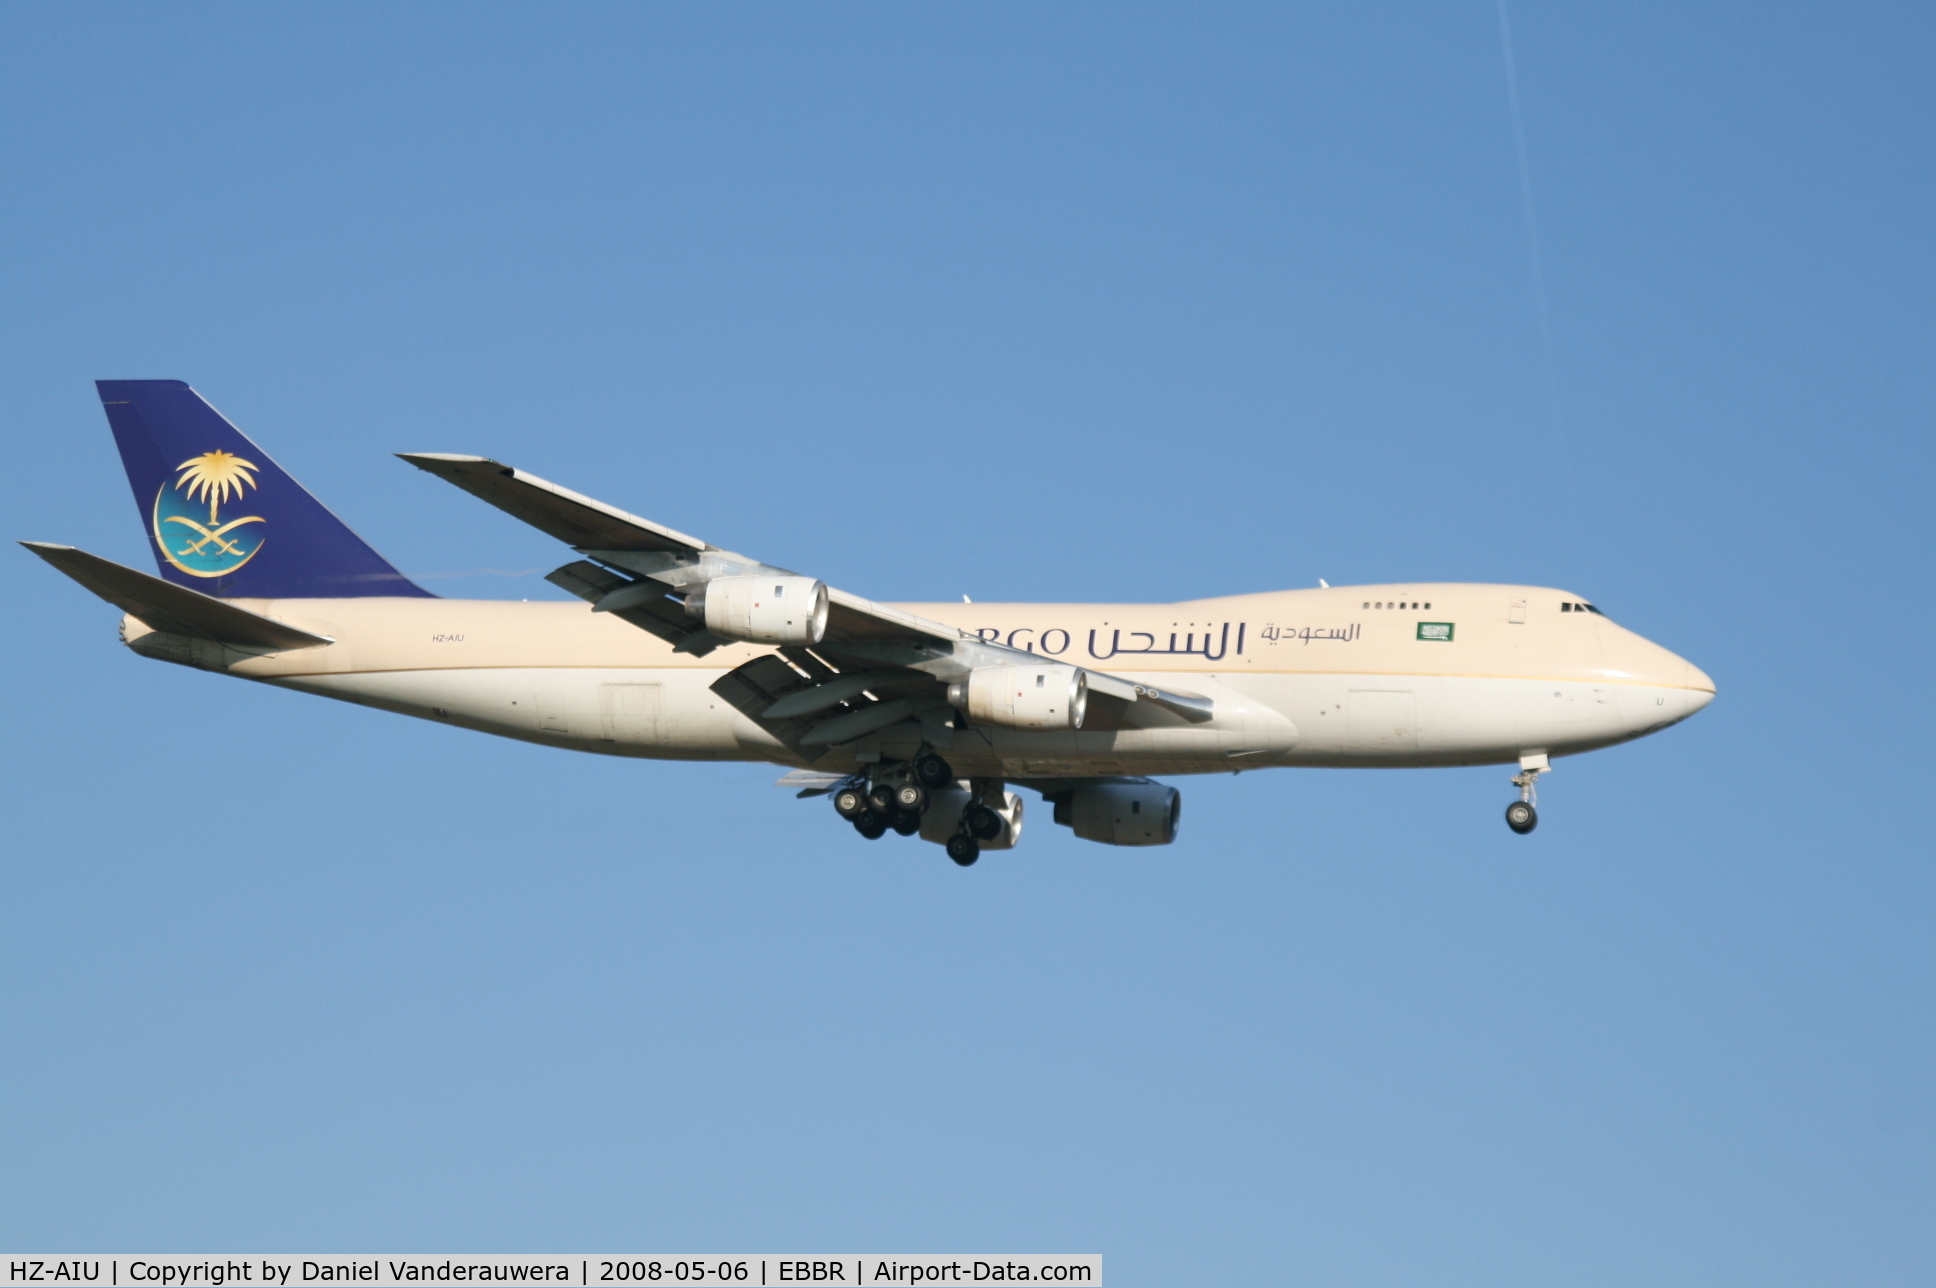 HZ-AIU, 1988 Boeing 747-268F C/N 24359/724, arrival of flight SV913 to rwy 02